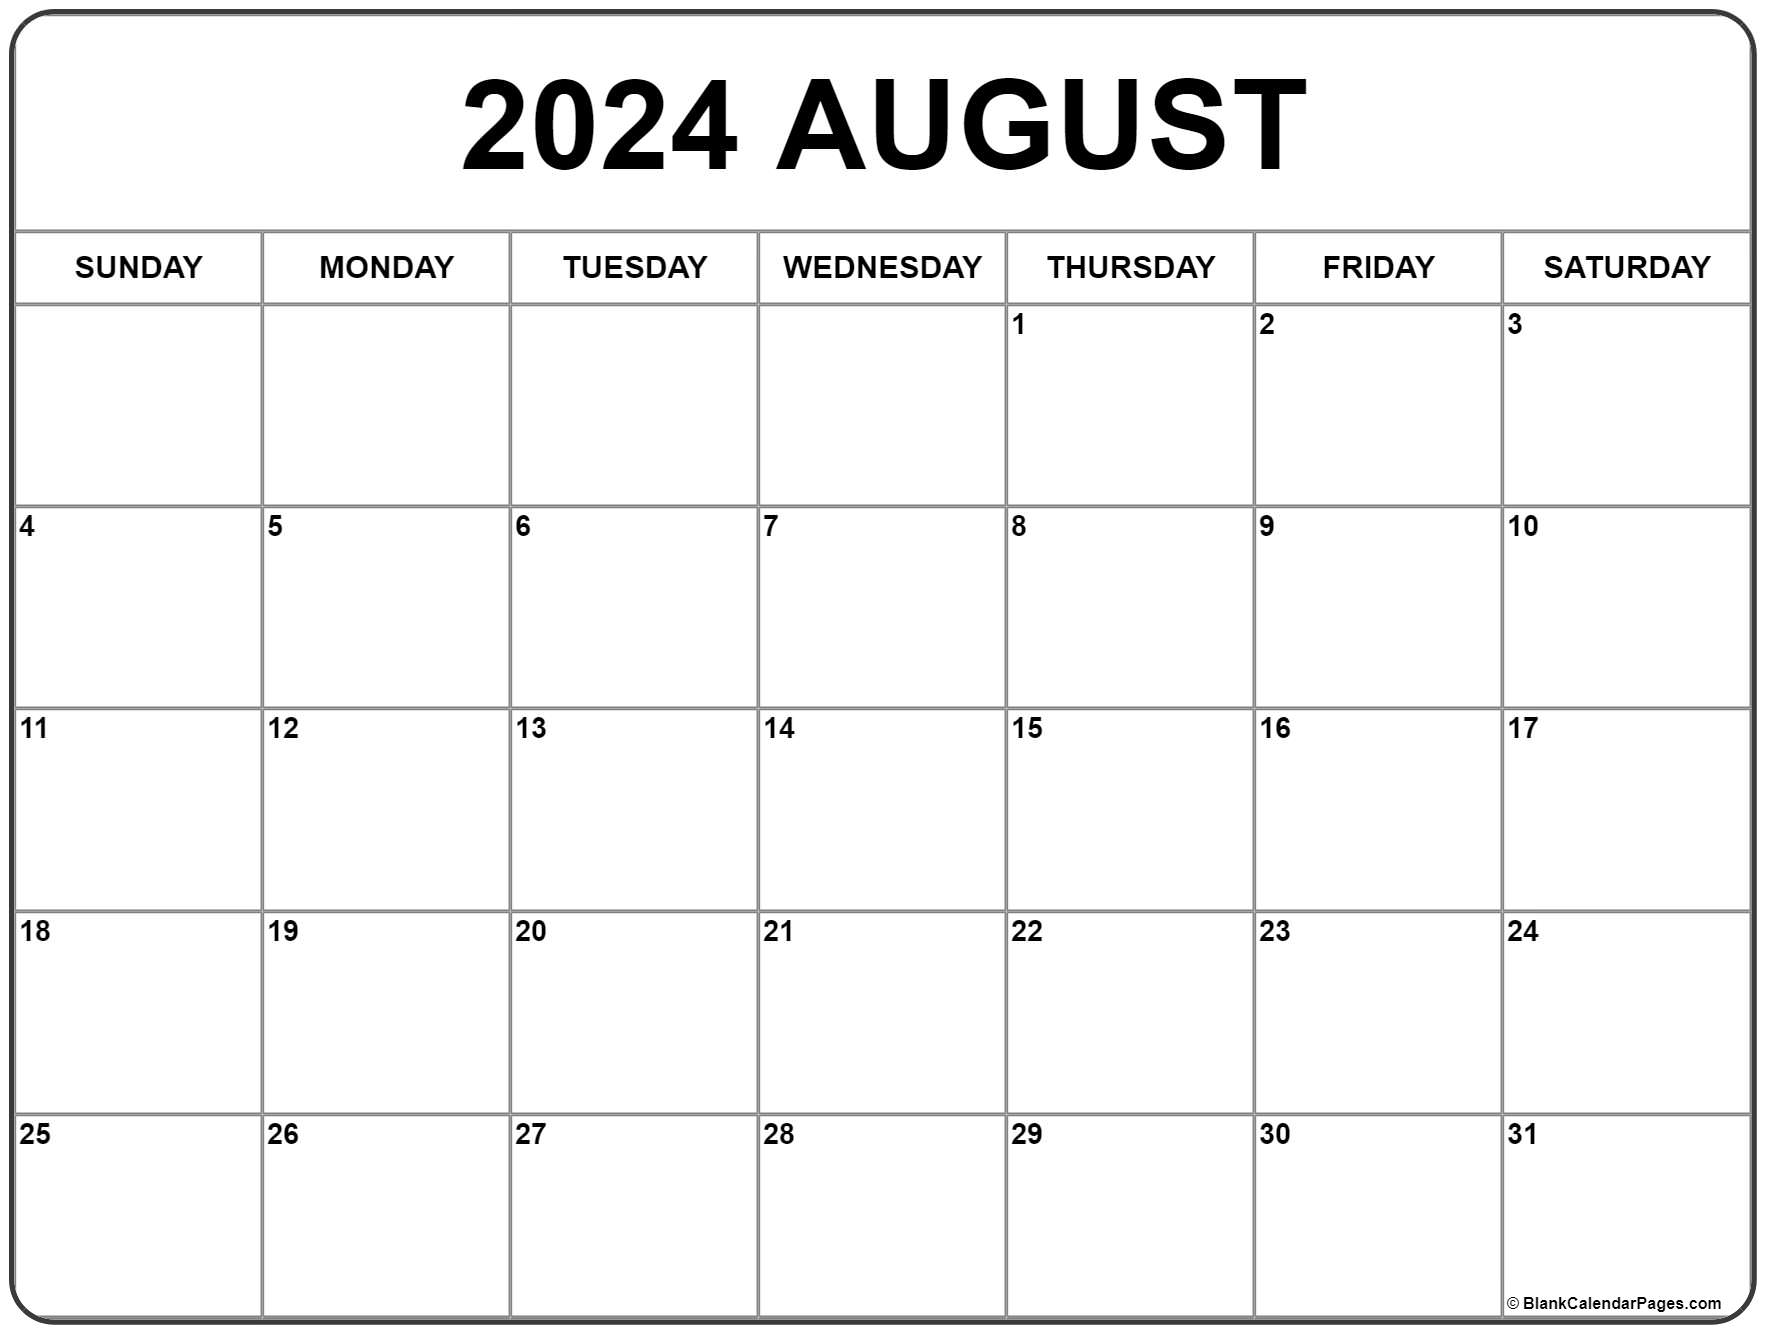 Calendar Of August 2021 August 2021 calendar | free printable monthly calendars